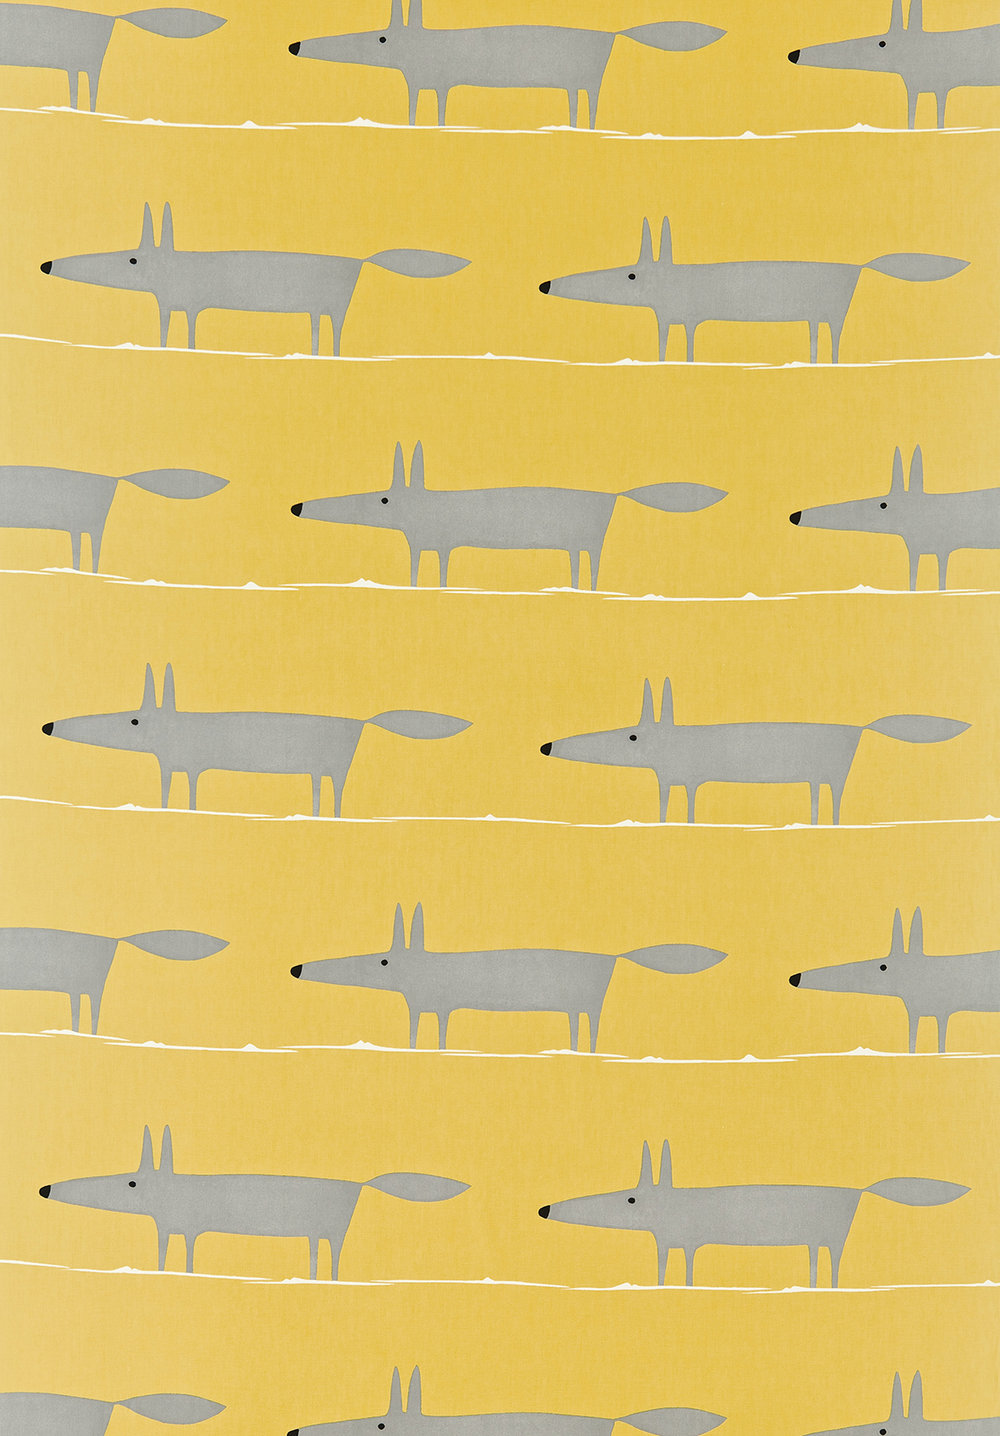 scion fox wallpaper,flugzeug,gelb,flugzeug,luftfahrt,fahrzeug